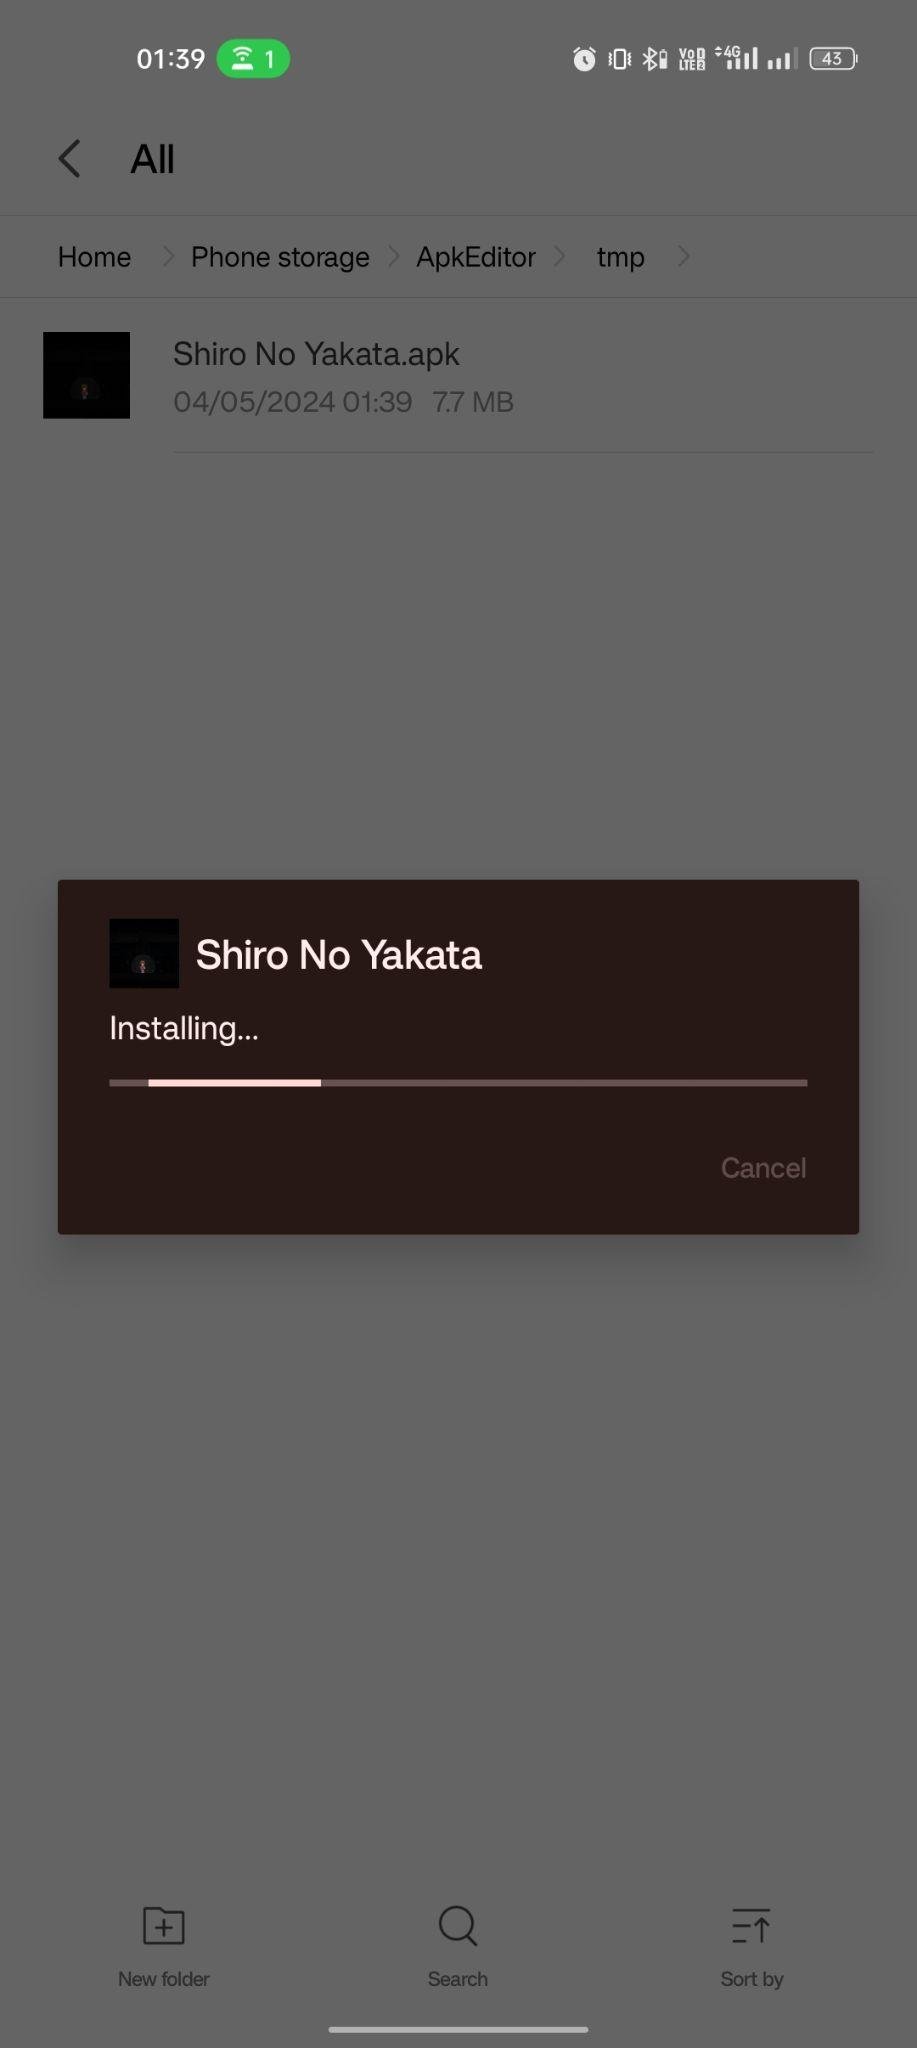 Shiro No Yakata apk installing